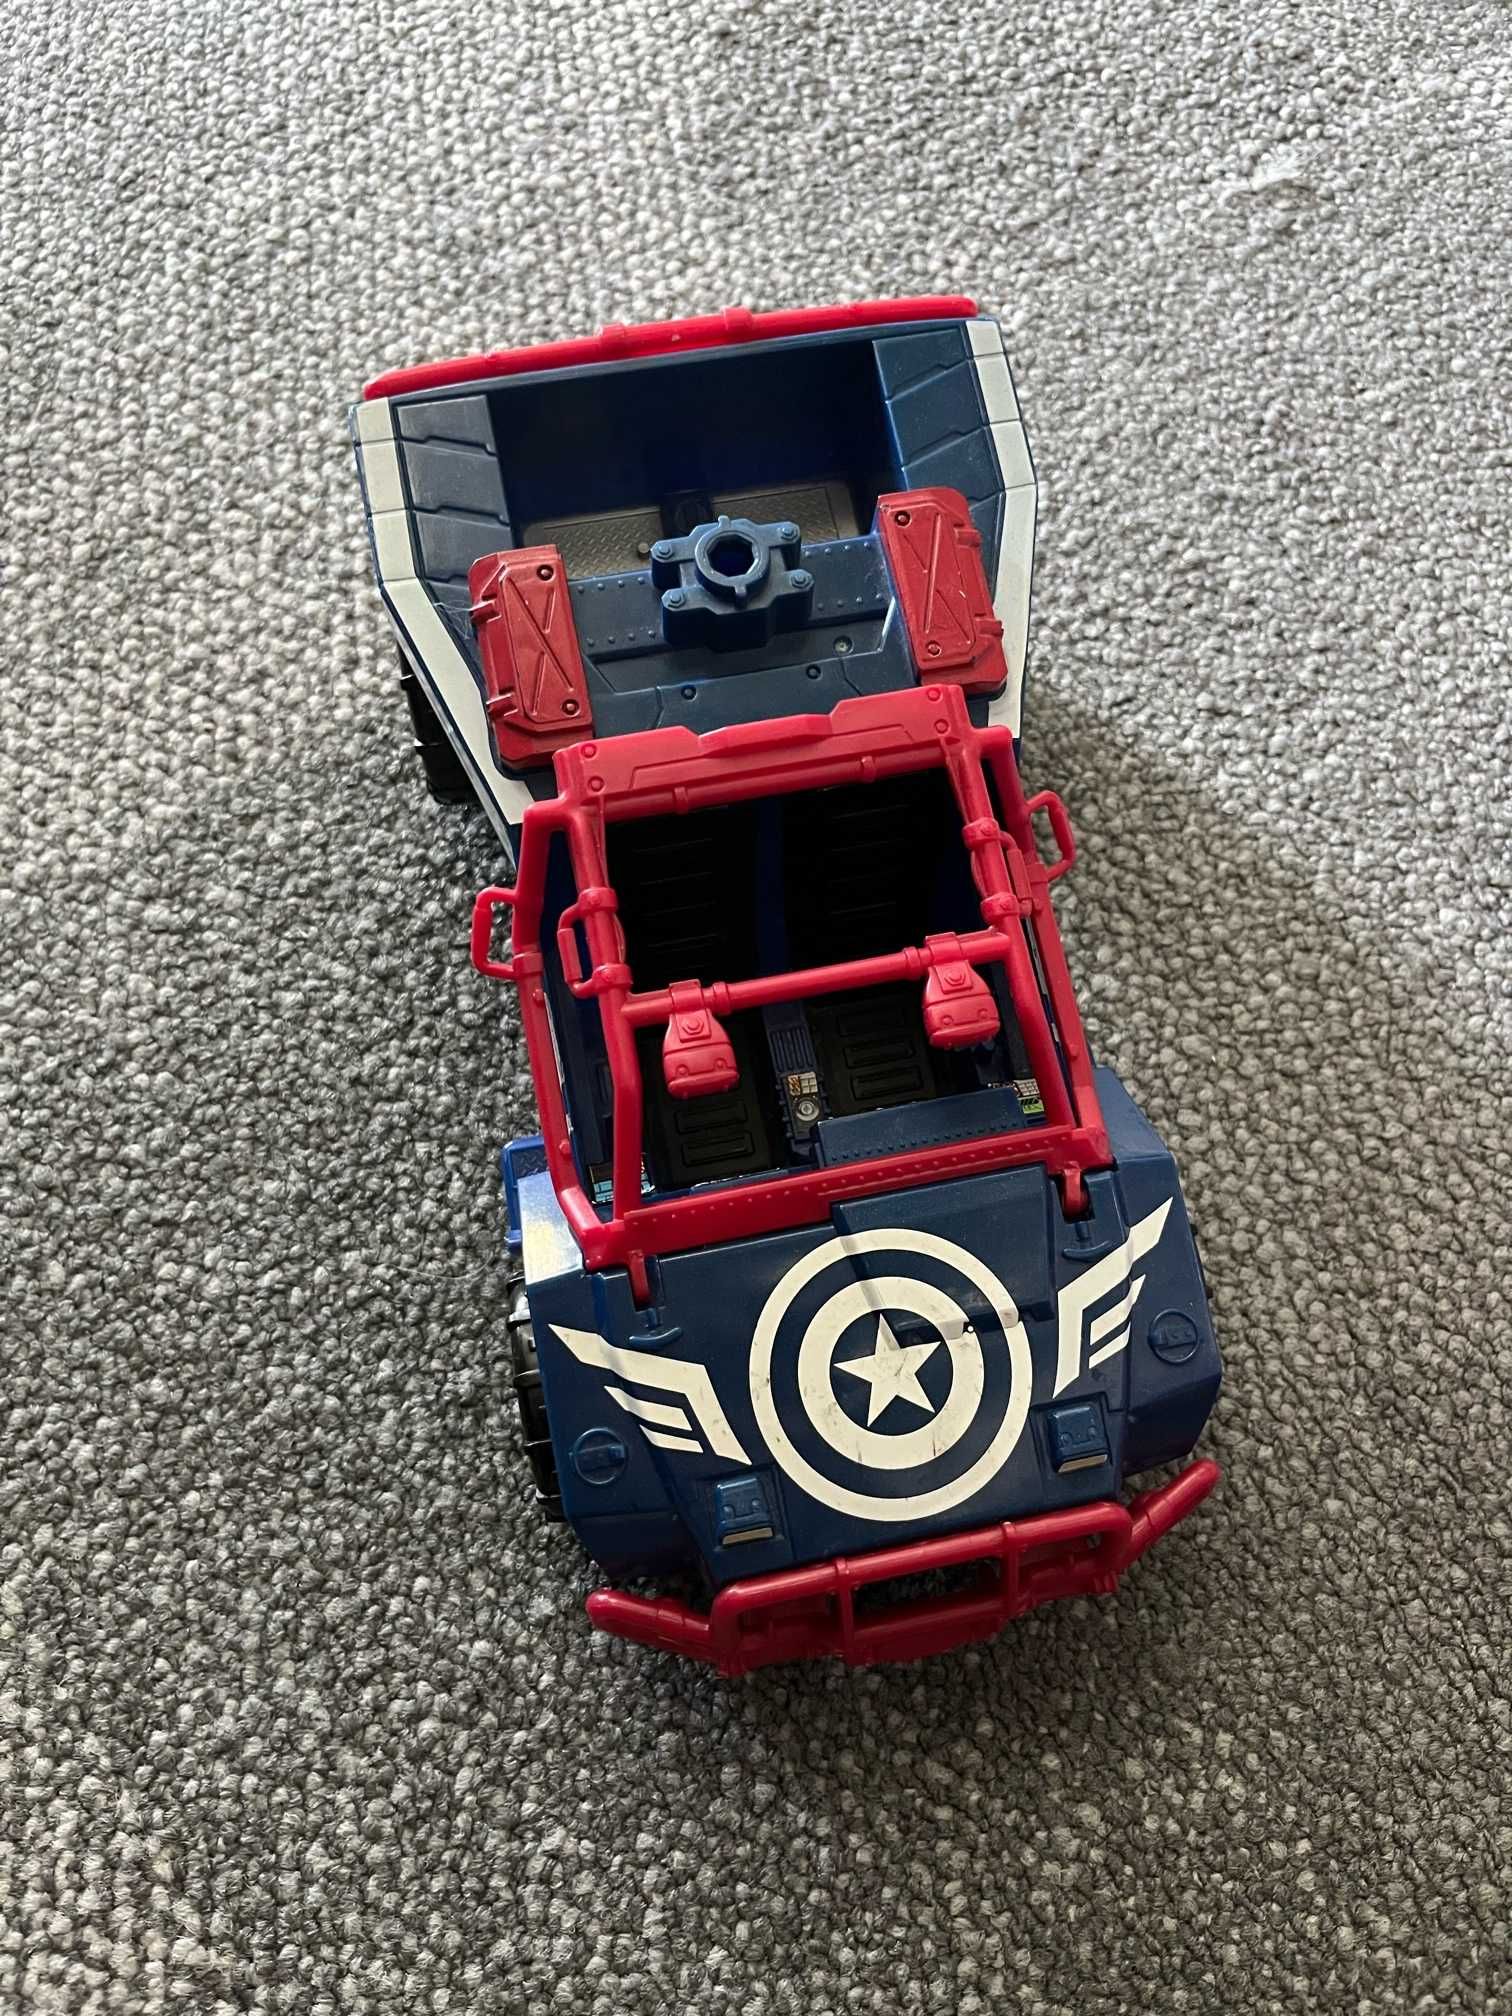 Avengers toy car